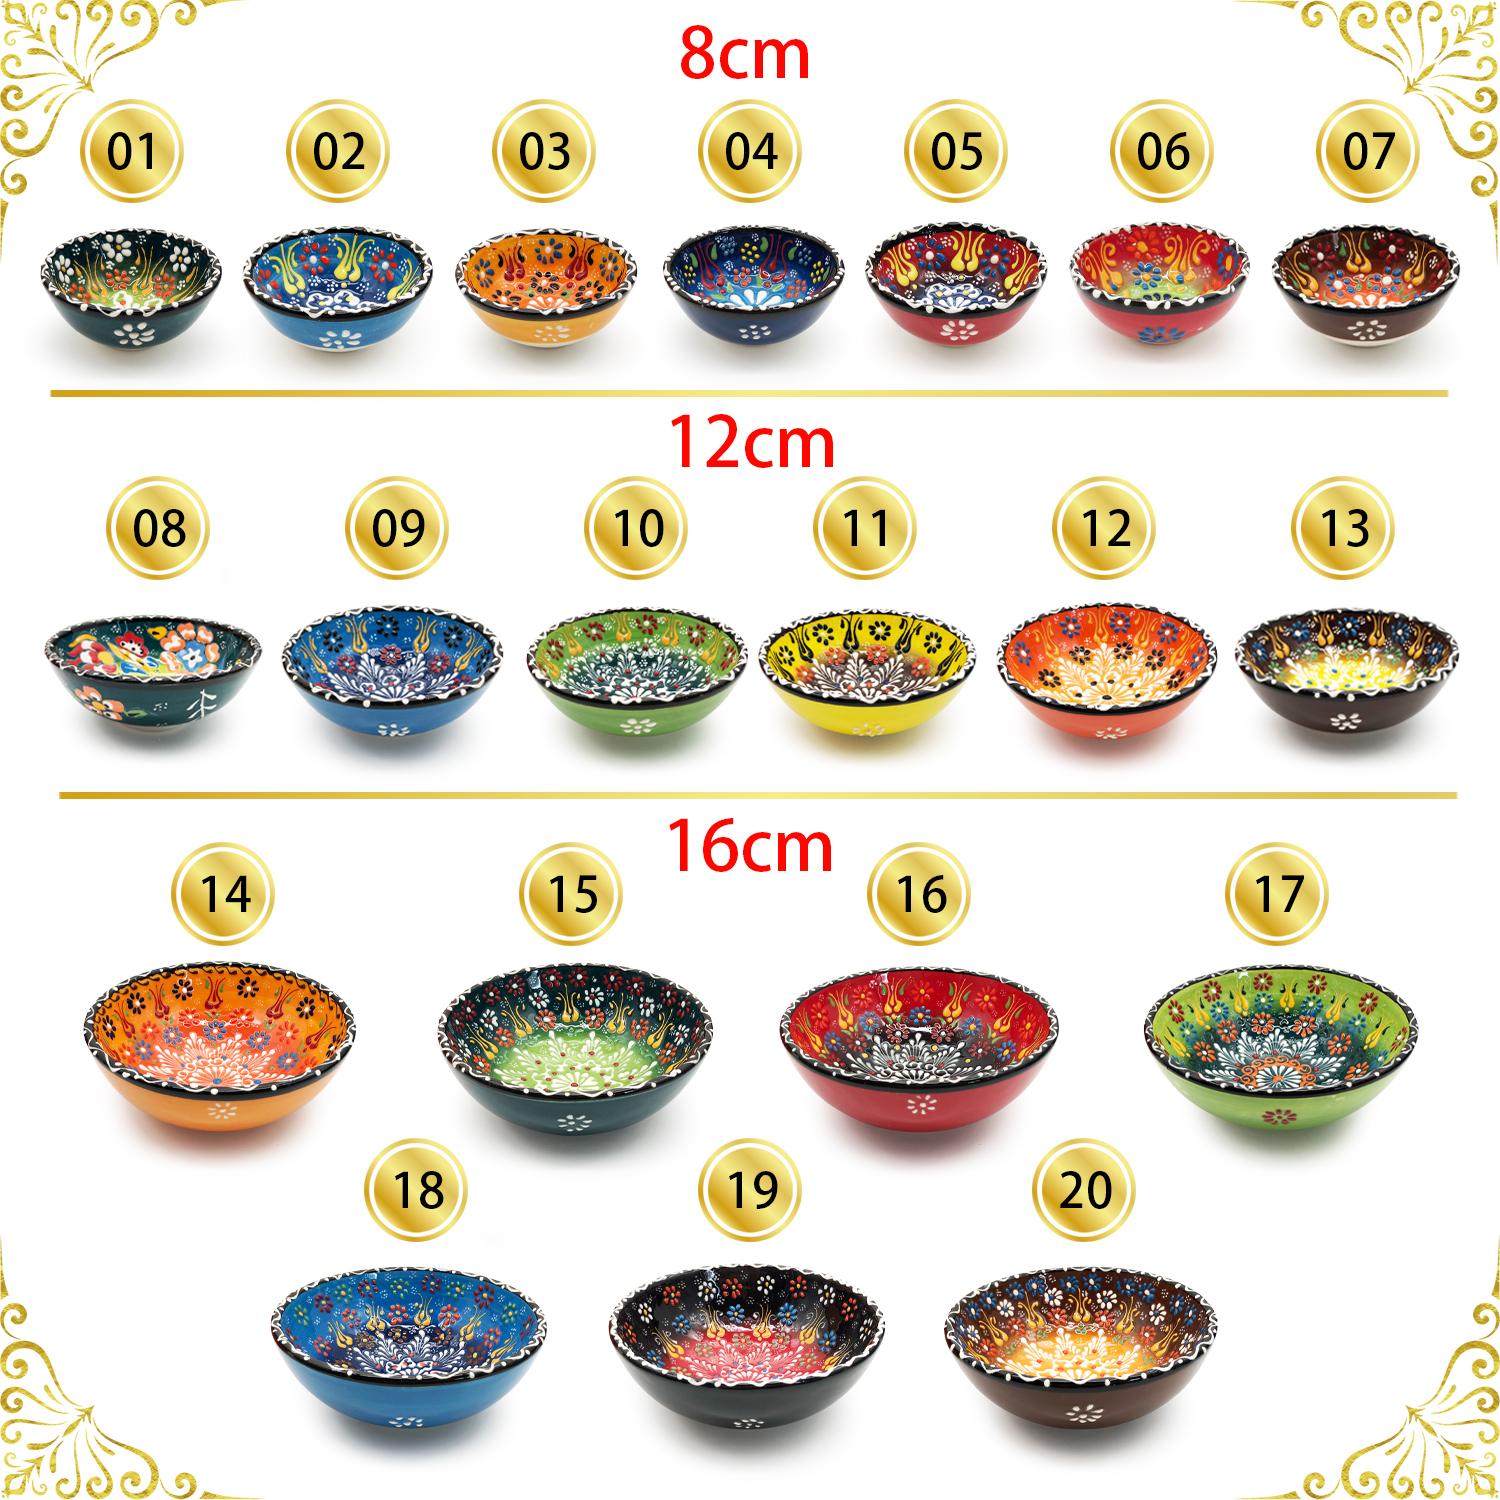 120MM手繪土耳其傳統工藝陶瓷碗， 土耳其餐具奧斯曼帝國浮雕圖案土耳其藝術時尚潮物(VTR-CERAMIC-BOWL-120MM-30101)